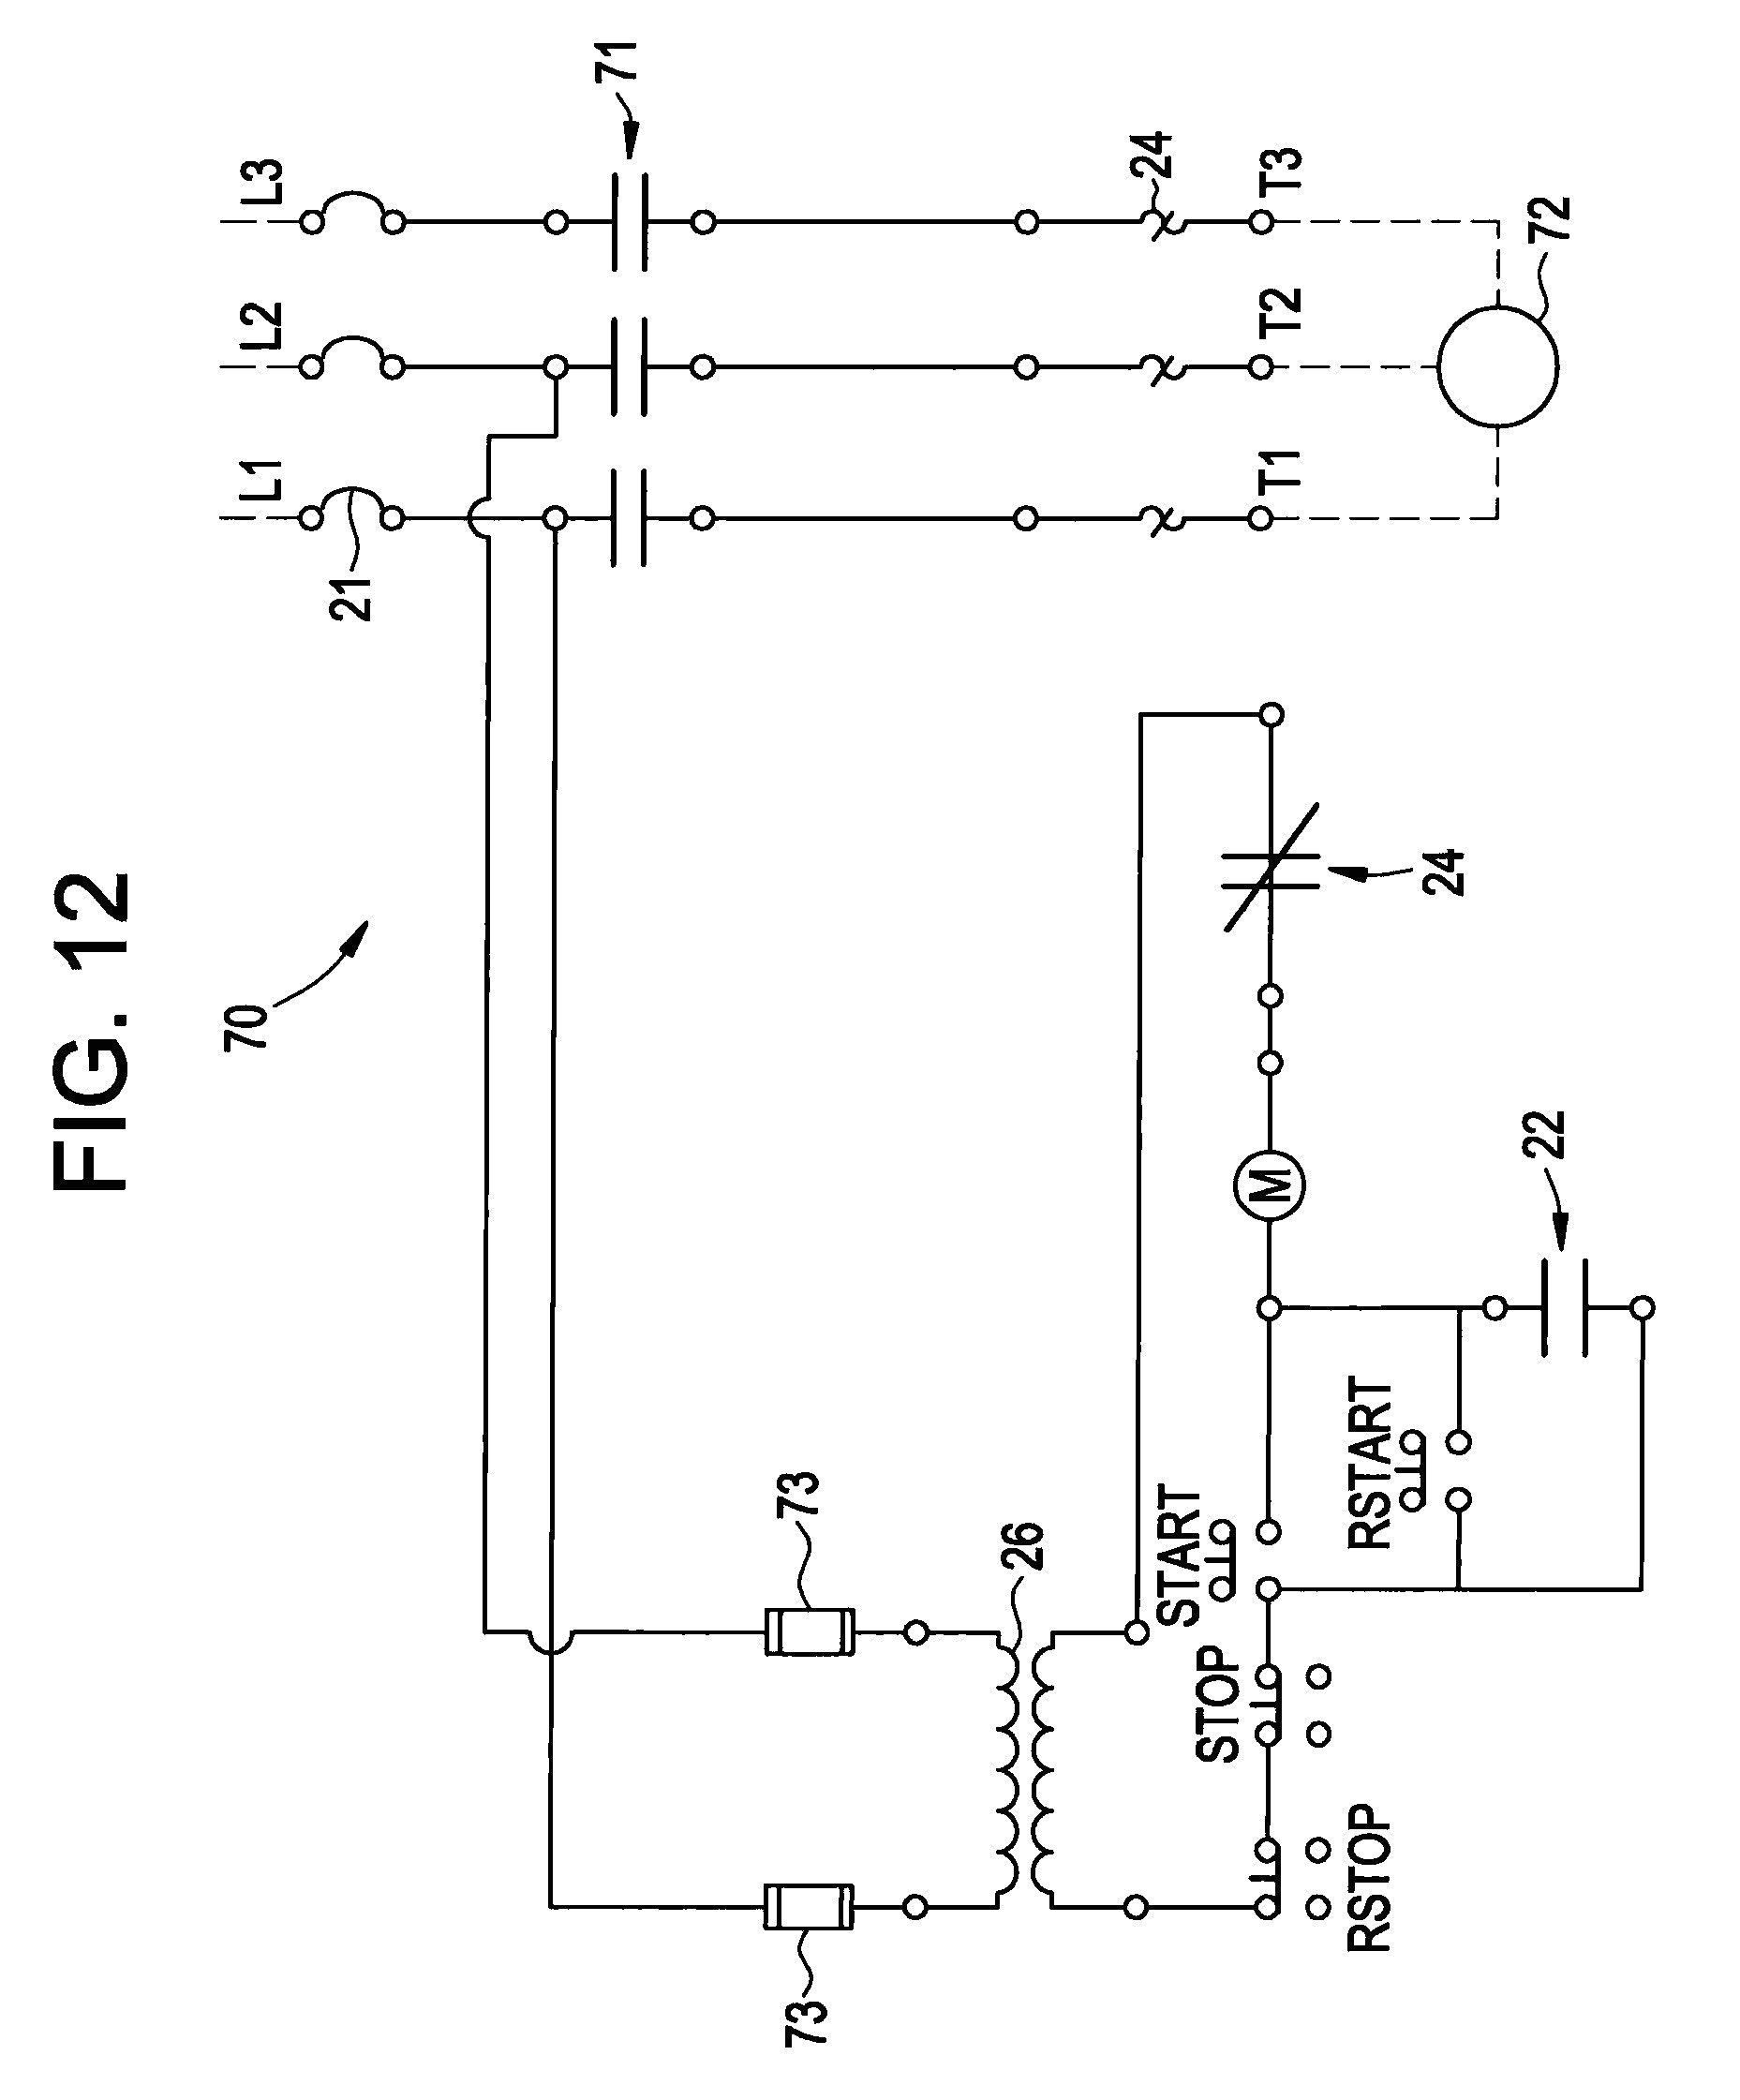 new wiring diagram for auto transformers diagram diagramtemplate diagramsample